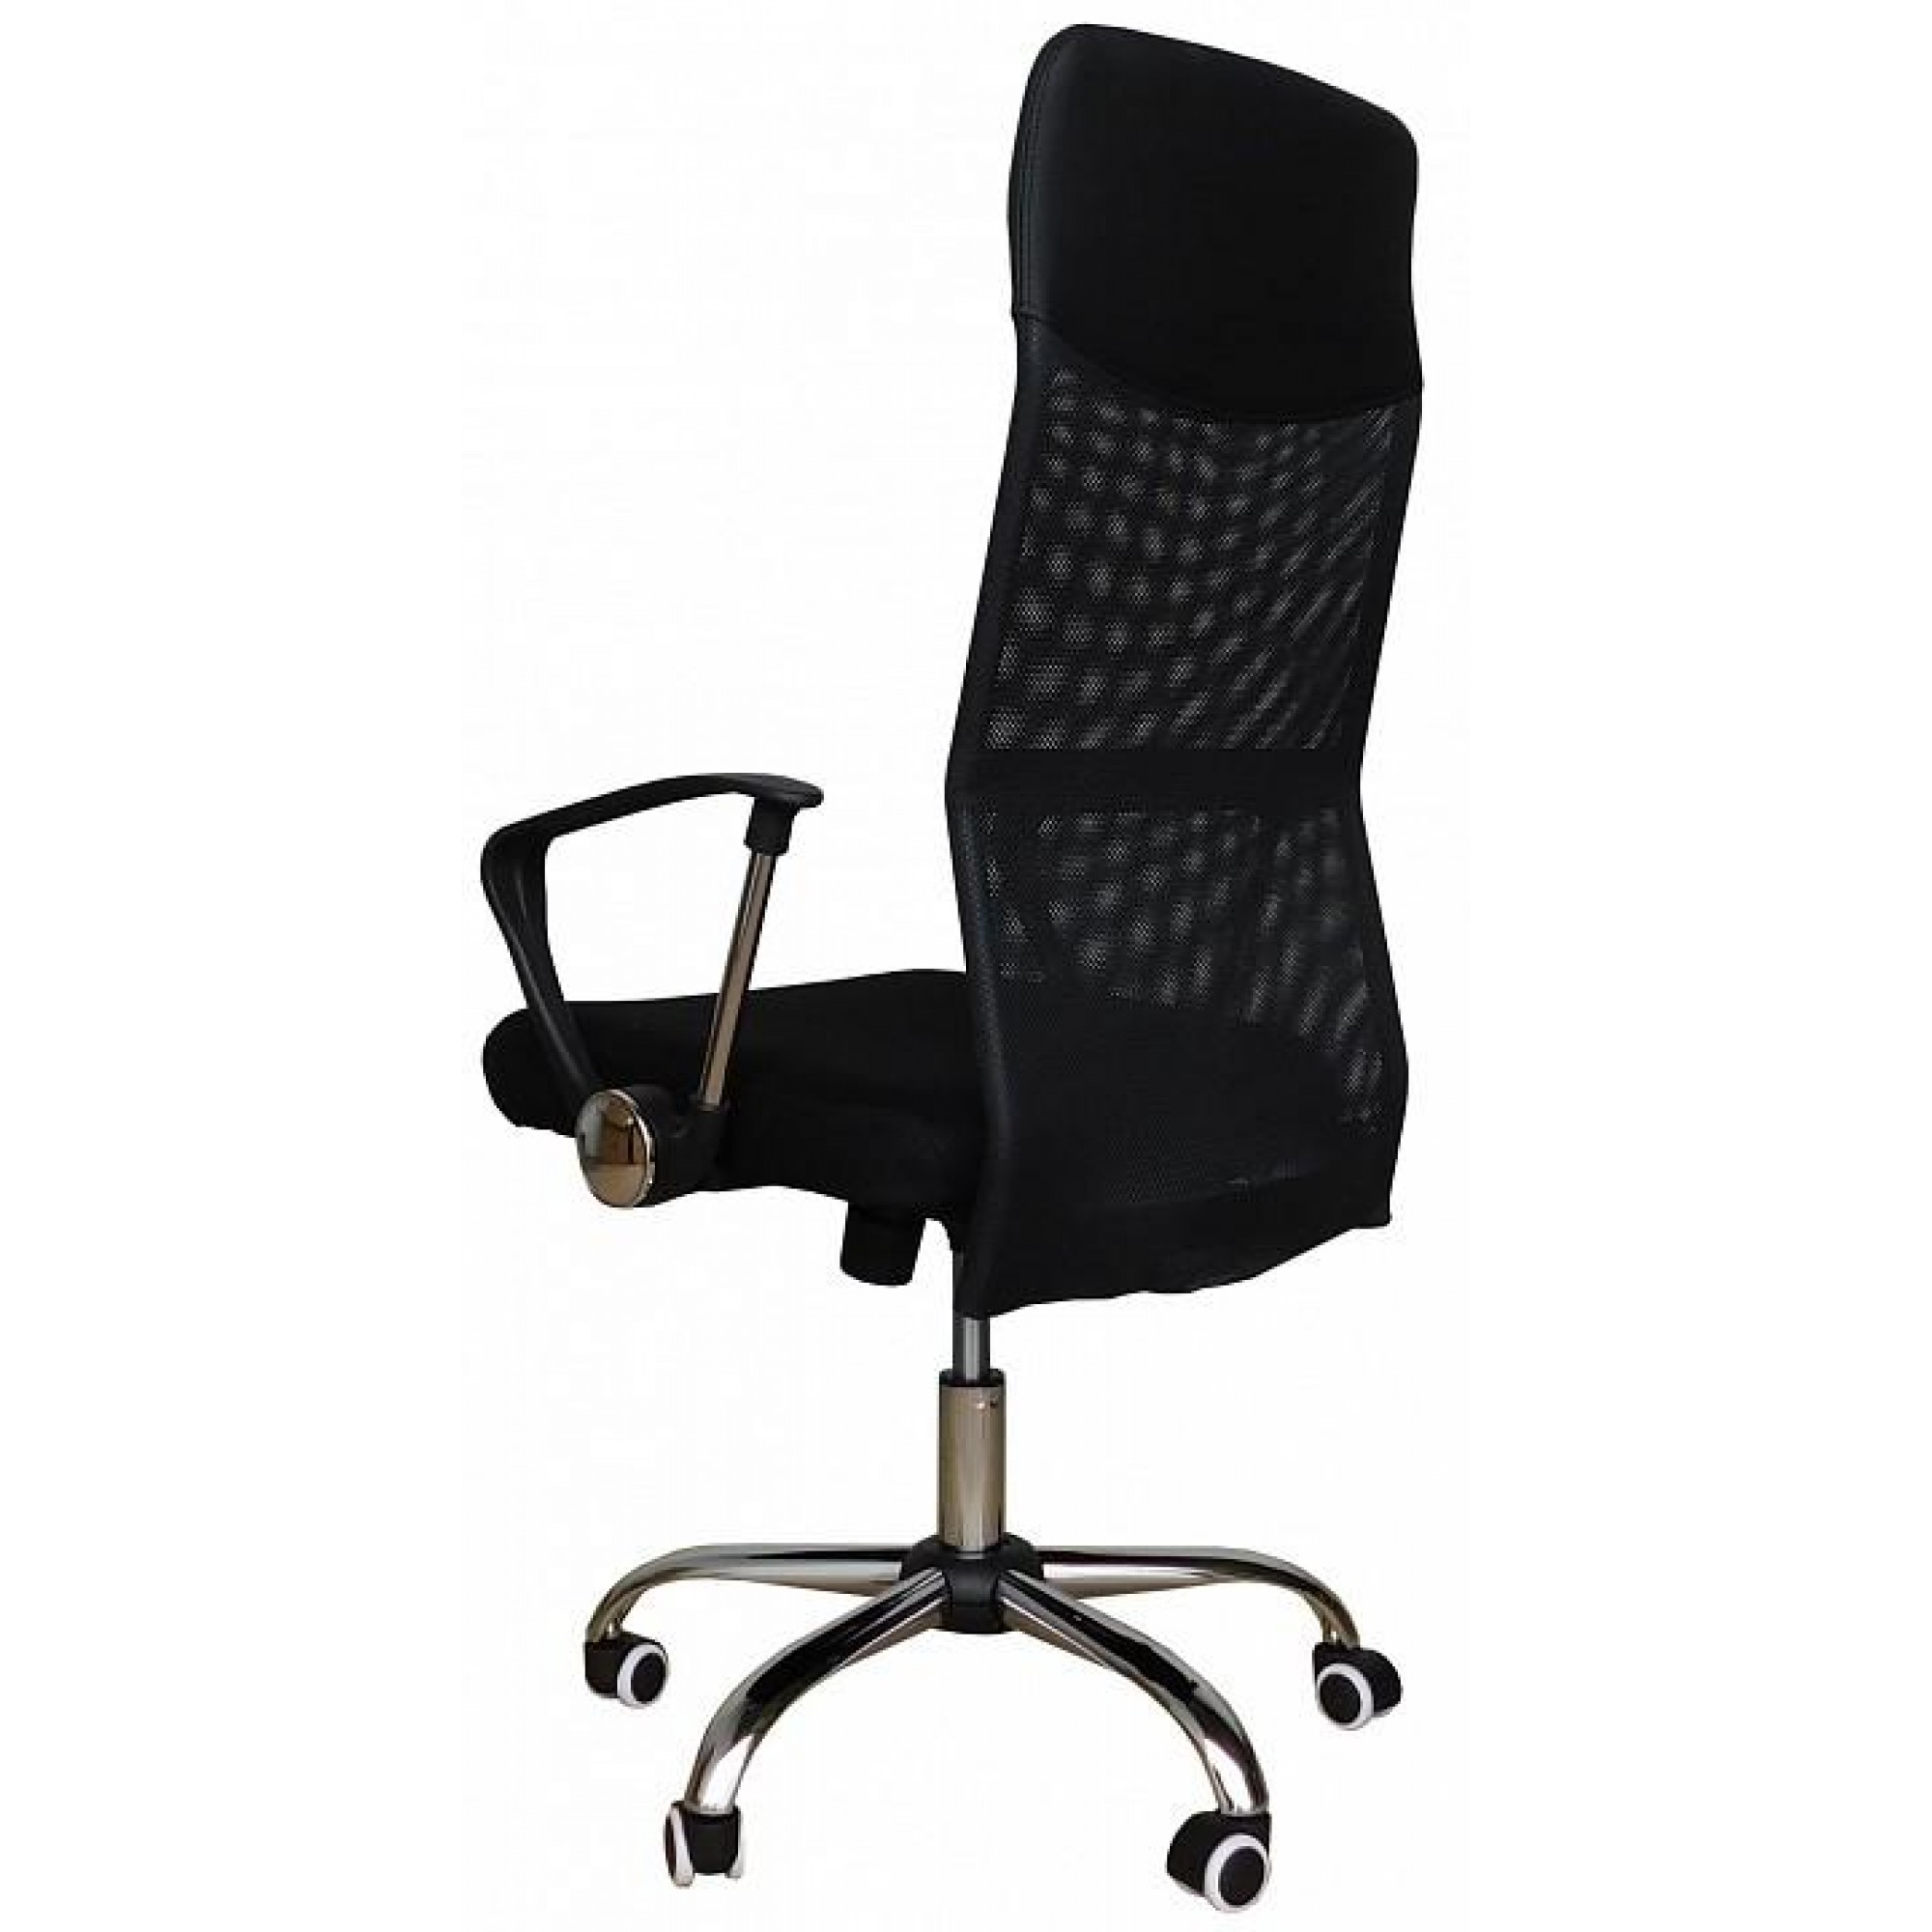 Кресло компьютерное MF-530 405431, MF-530 black